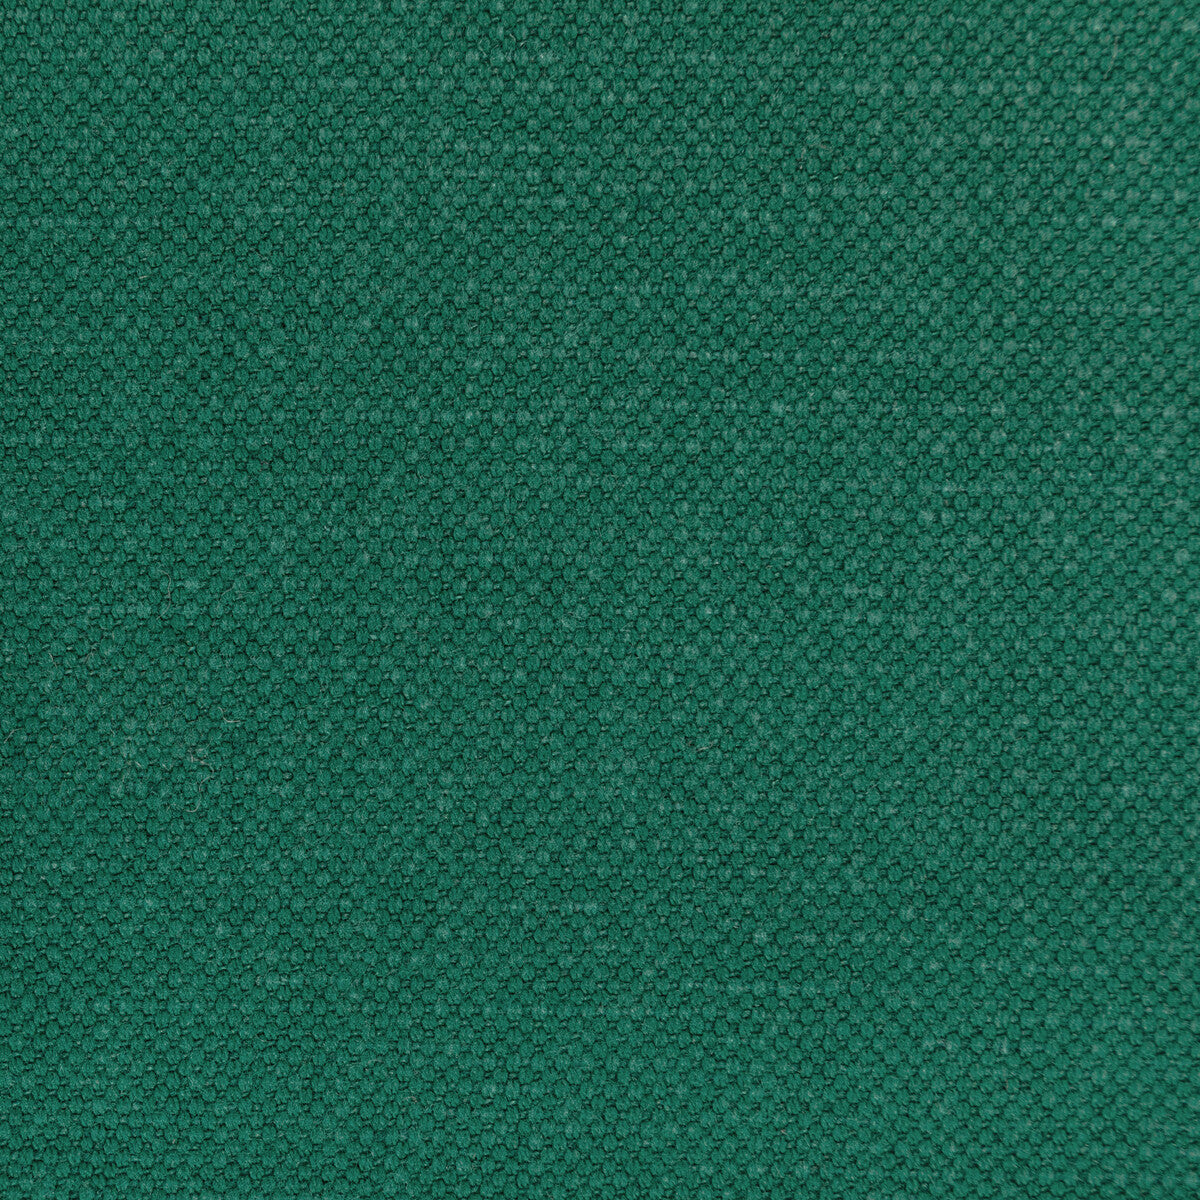 Carson fabric in garden color - pattern 36282.353.0 - by Kravet Basics